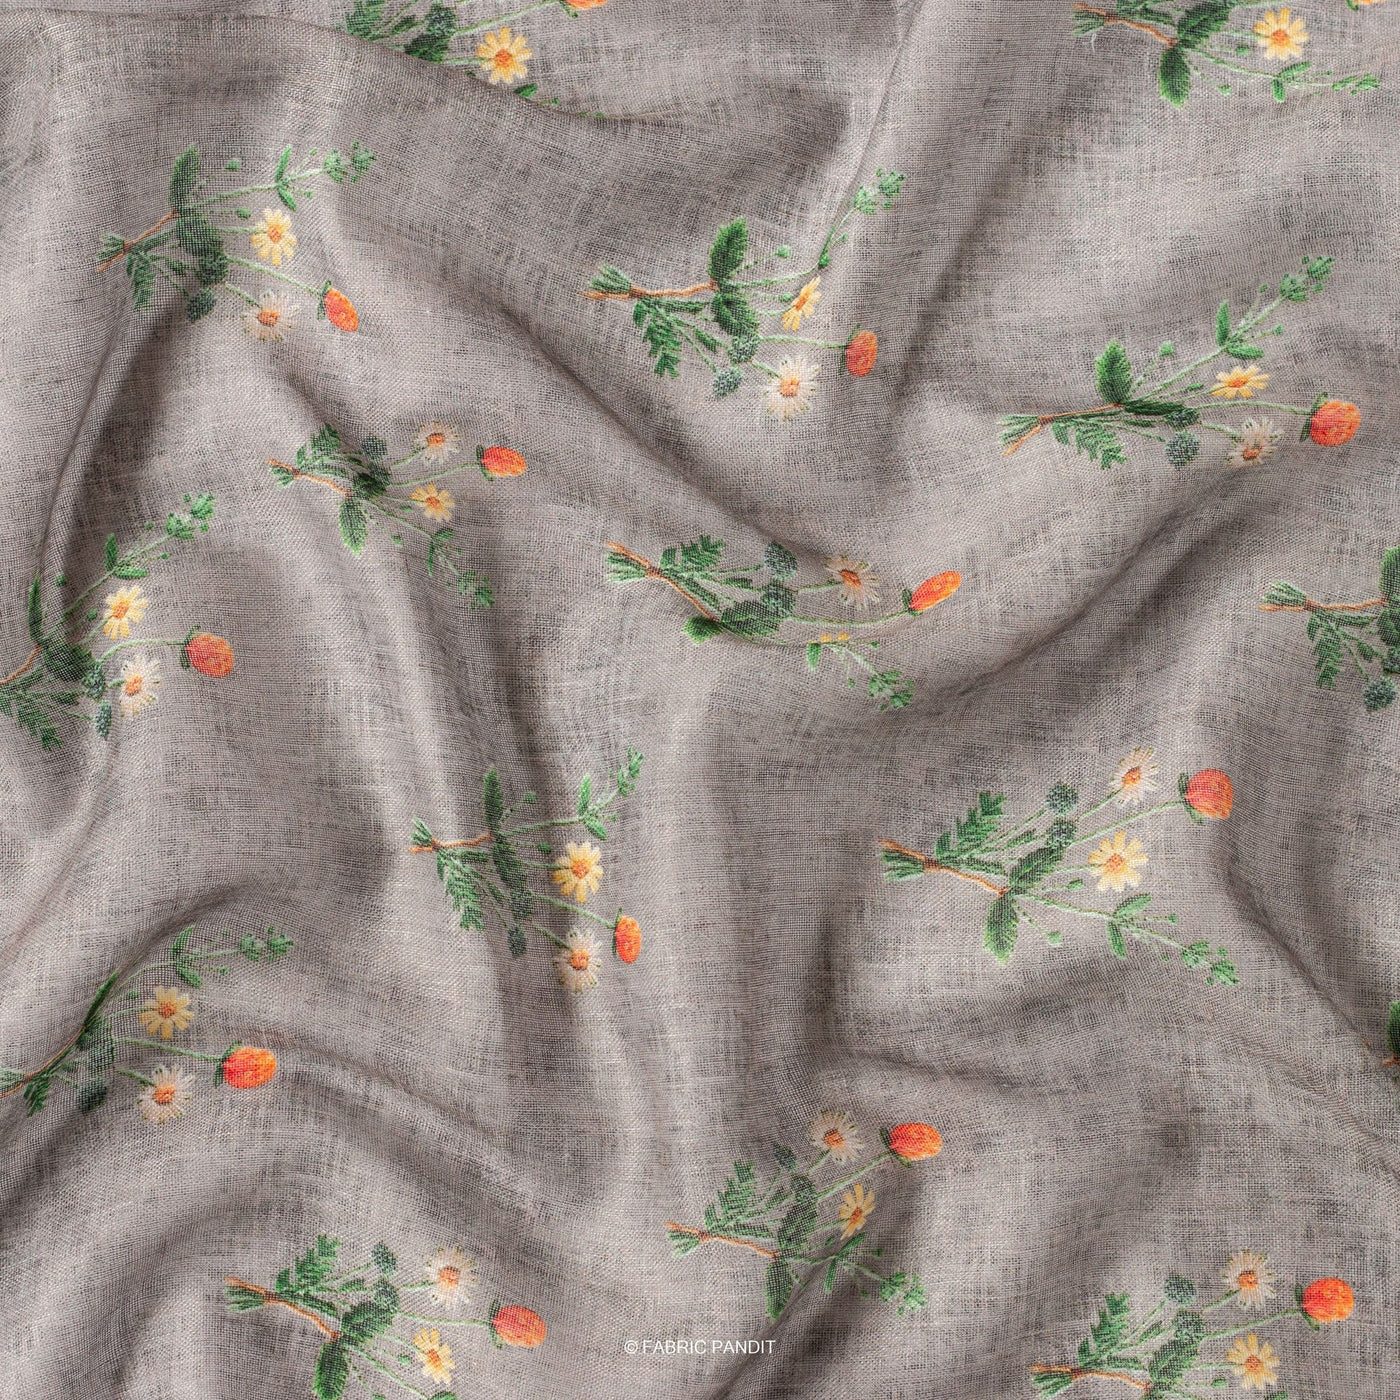 Fabric Pandit Cut Piece (Cut Piece) Dark Grey and Orange Flower Bunch Digital Printed Linen Neps Fabric (Width 44 Inches)